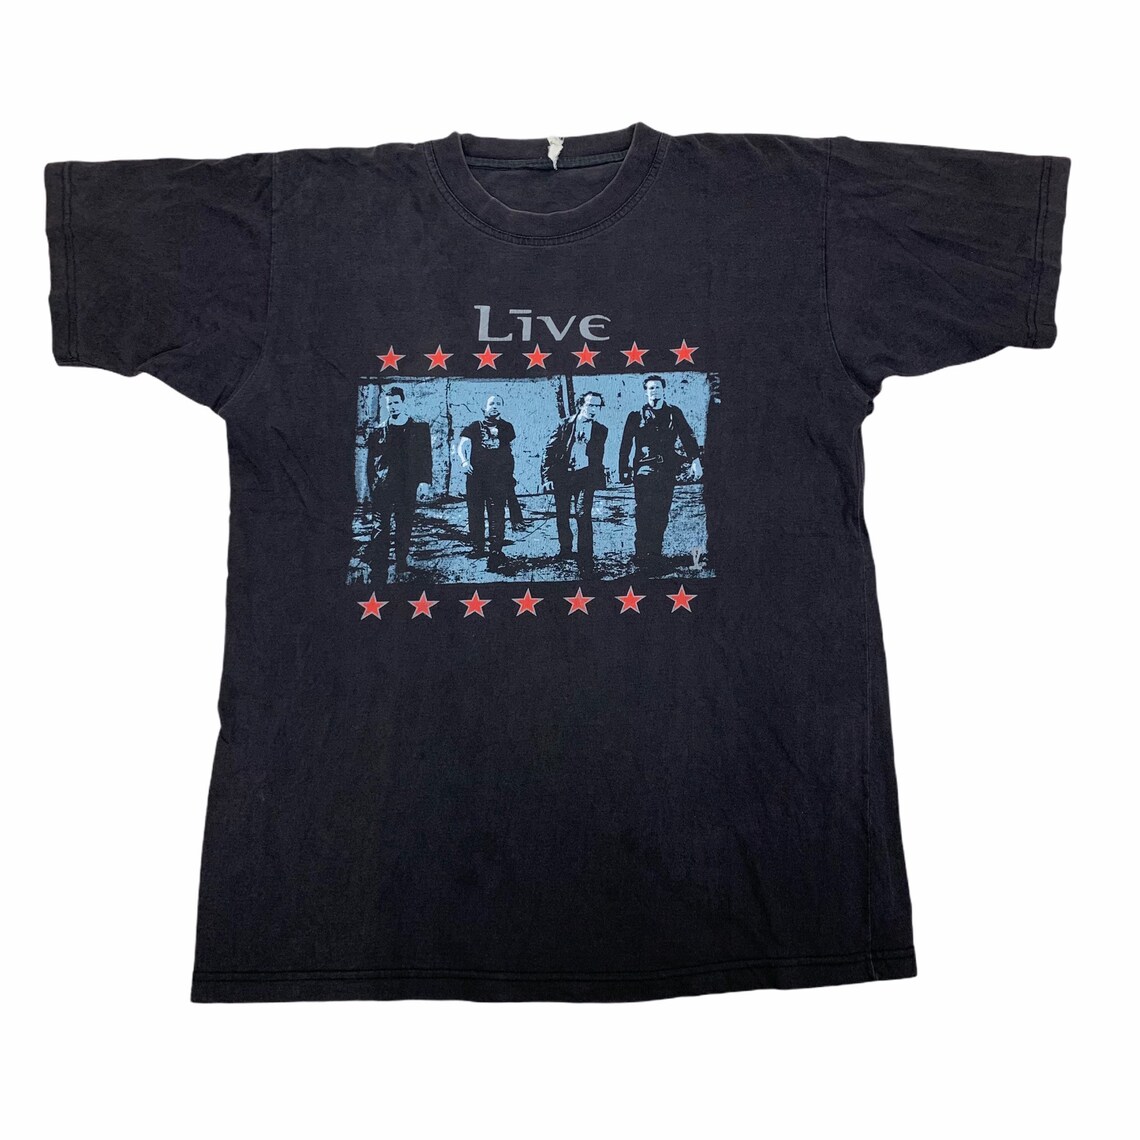 Vintage 90s Live Band Tshirt Rock Grunge Alternative | Etsy